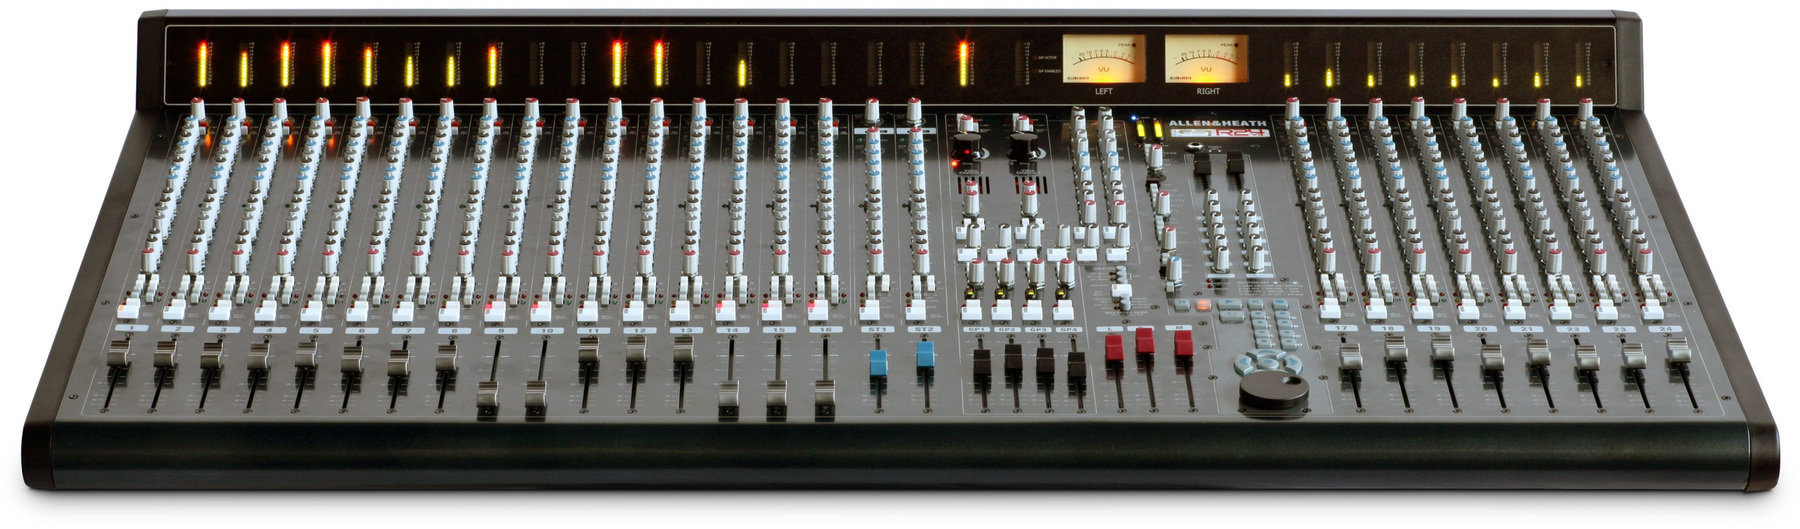 Mixing Desk Allen & Heath GS-R24M